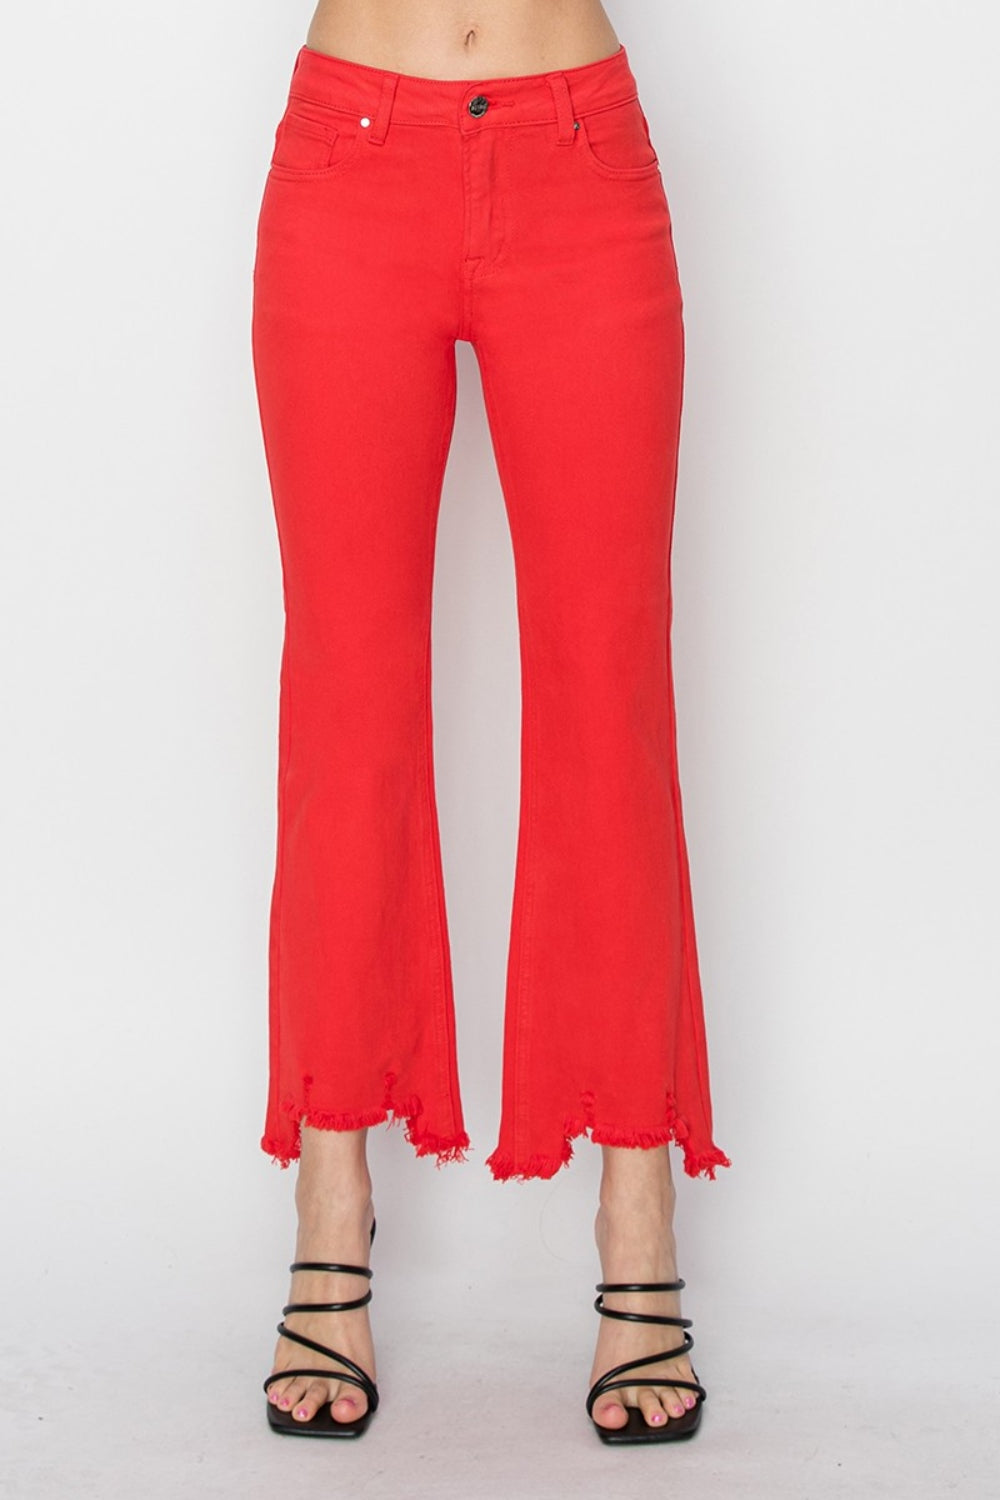 RISEN Red Straight Leg Jeans - Inspired Eye Boutique